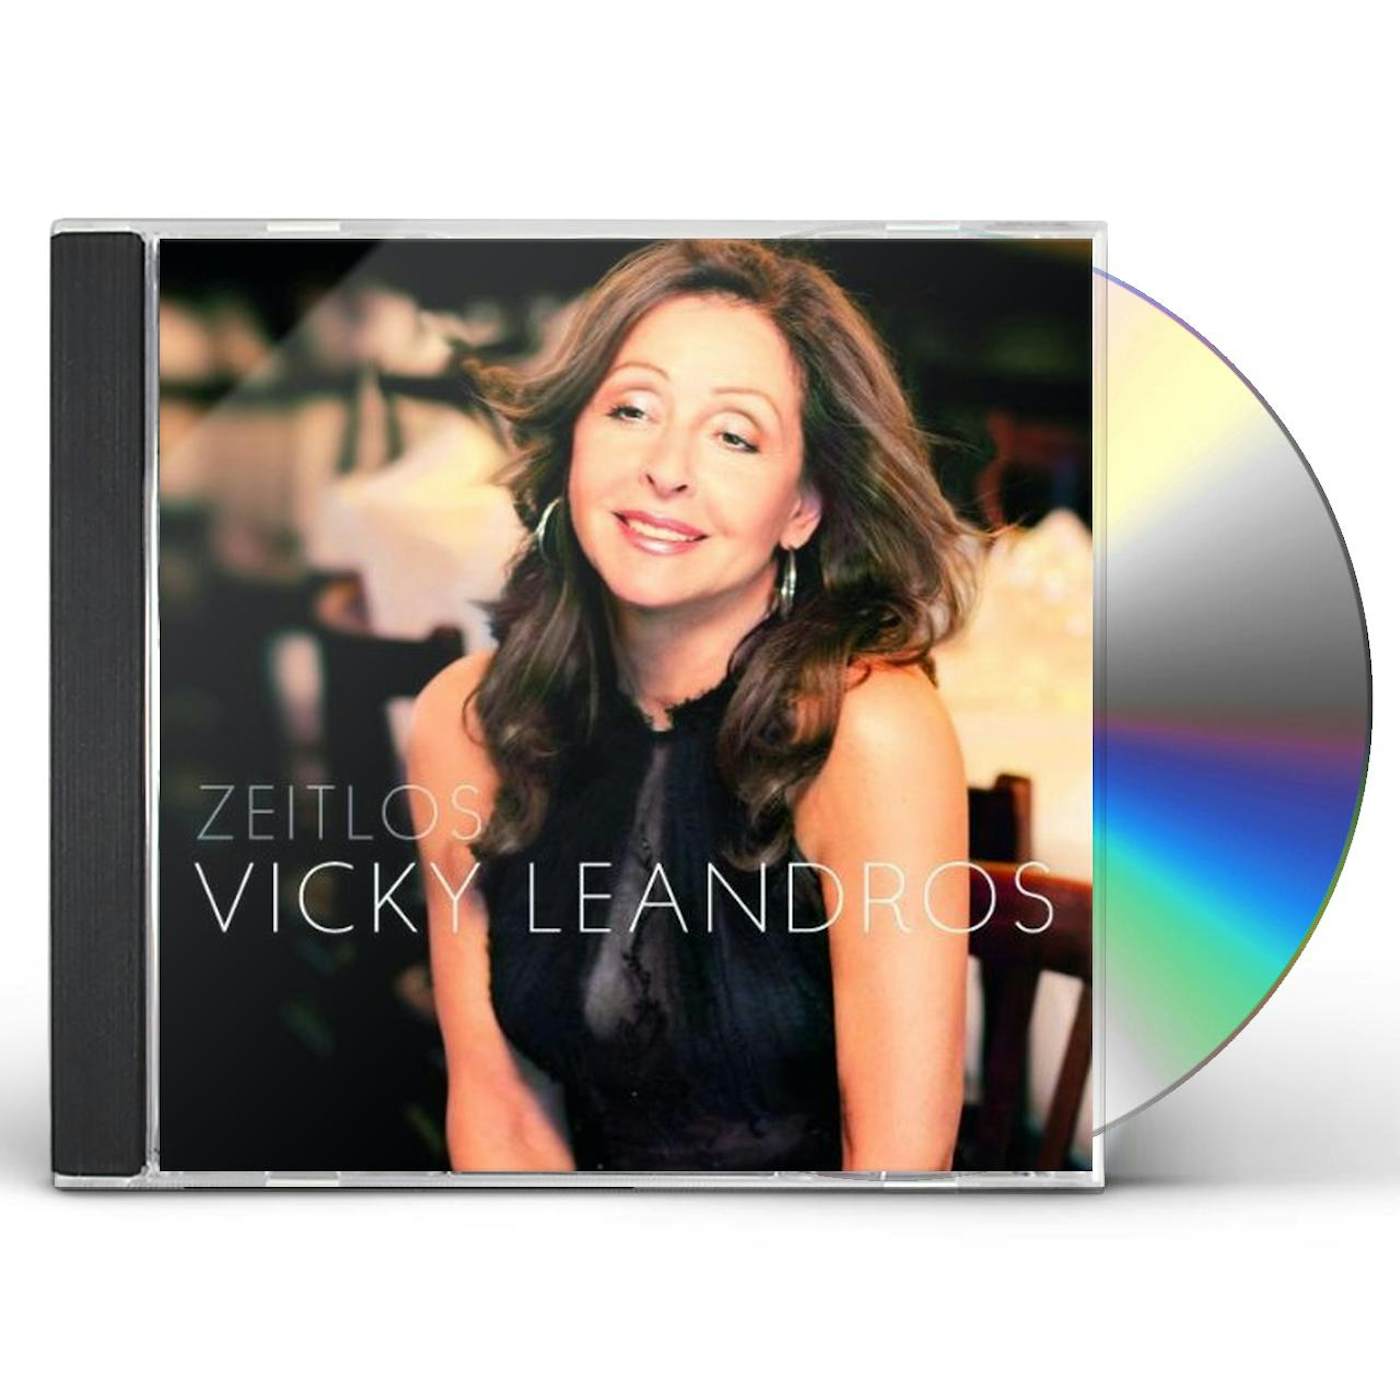 Vicky Leandros ZEITLOS CD